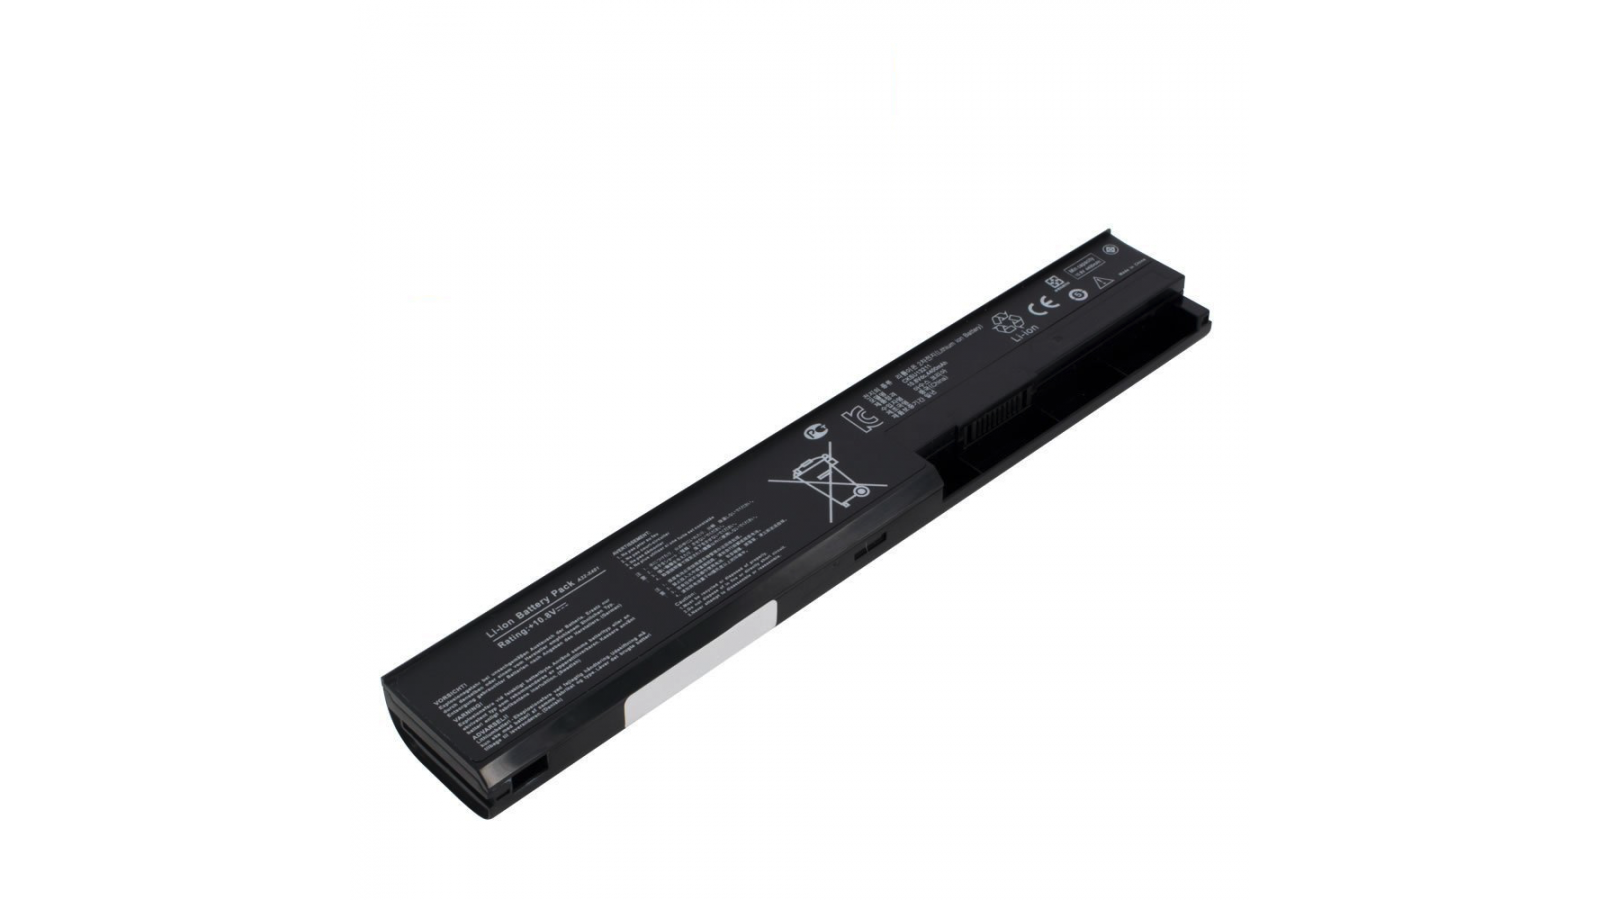 Batteria 5200mAh compatibile con Asus X301 X301A X401 X401A X401U X501 X501A X501U